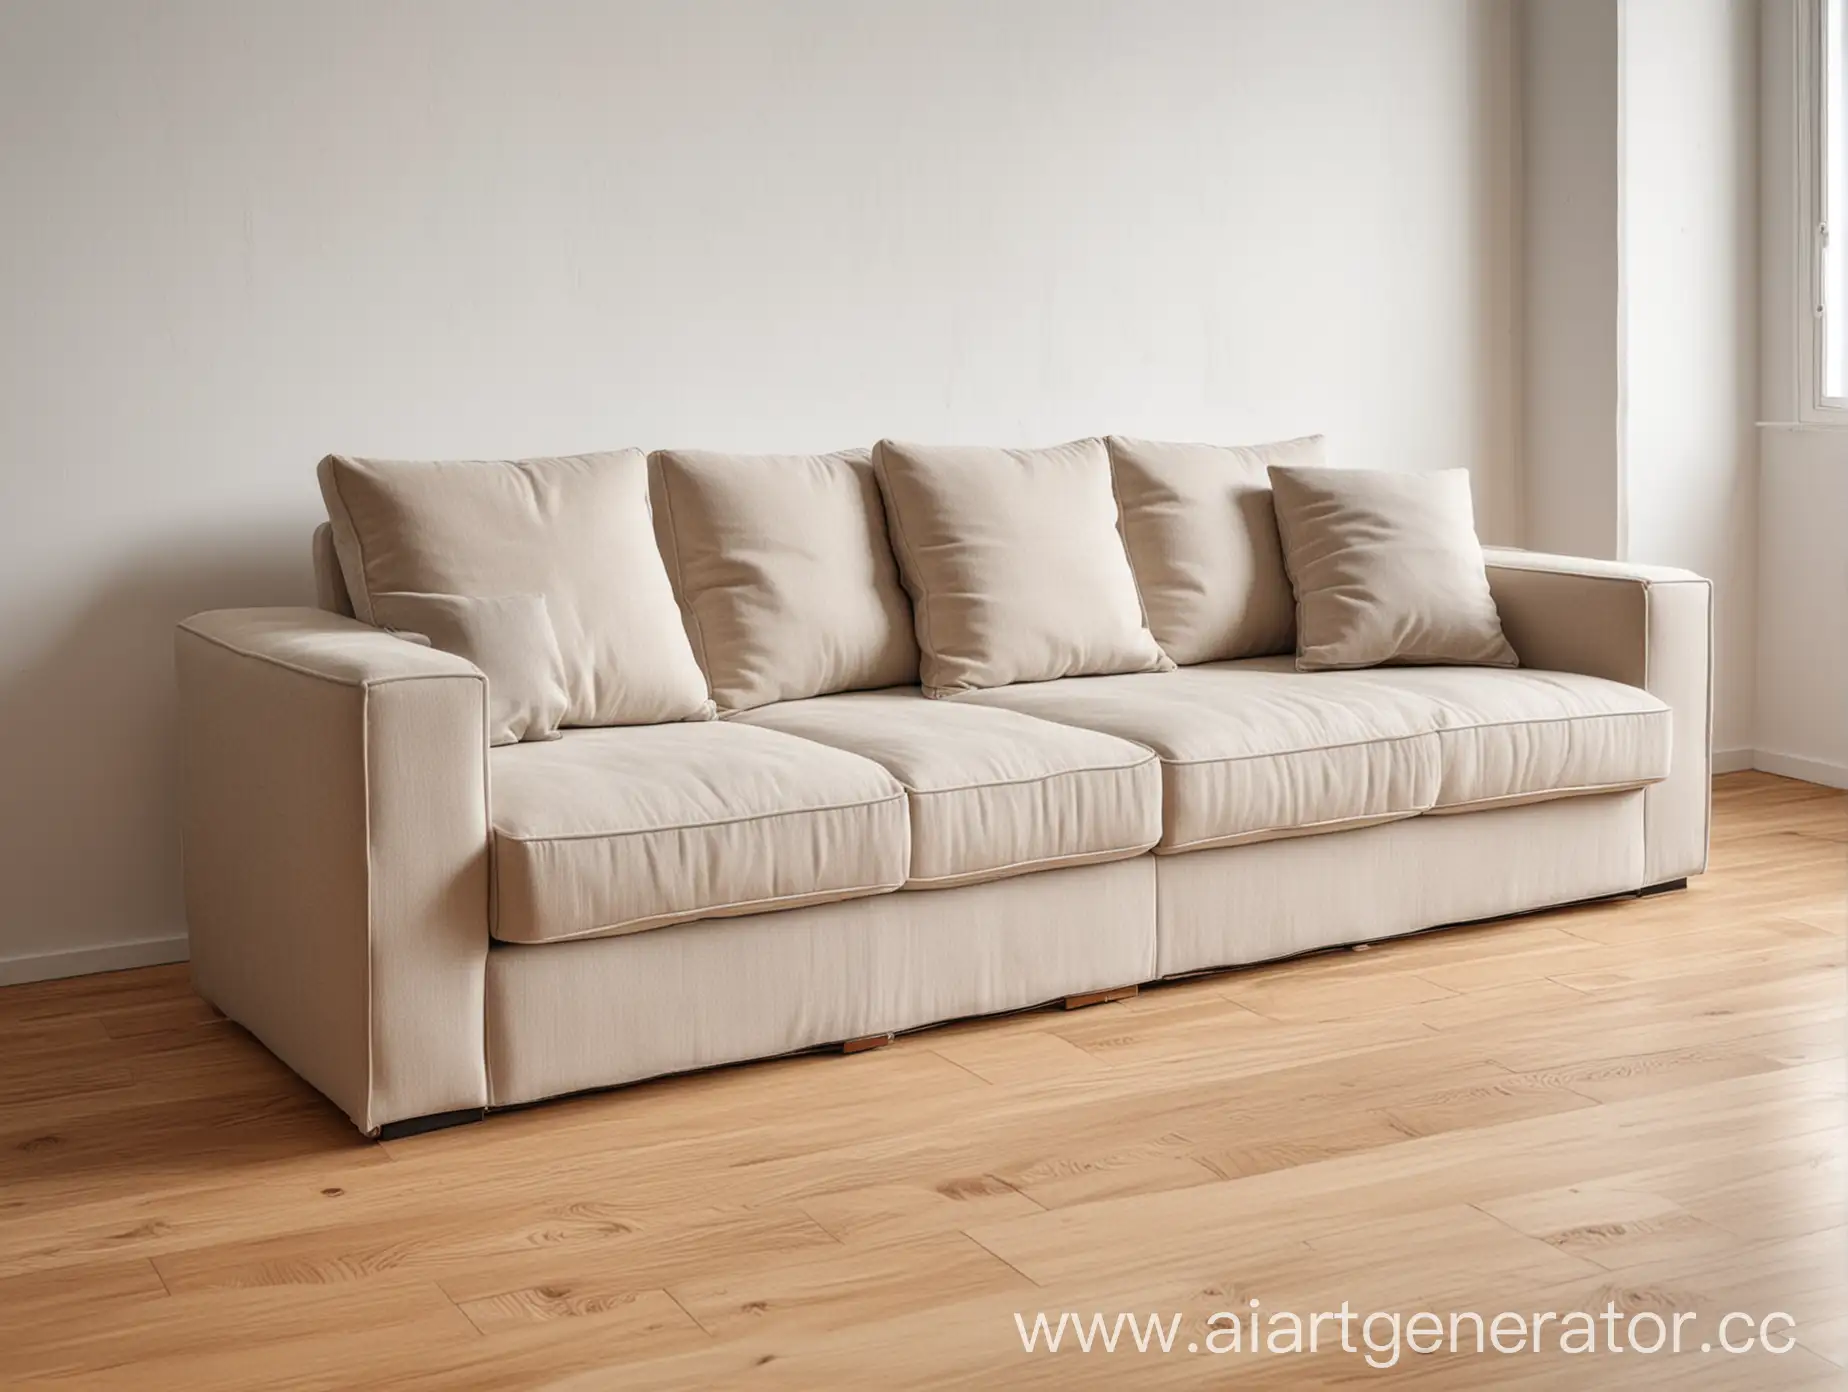 Modern-Sofa-in-Spacious-Interior-Home-Design-Infographic